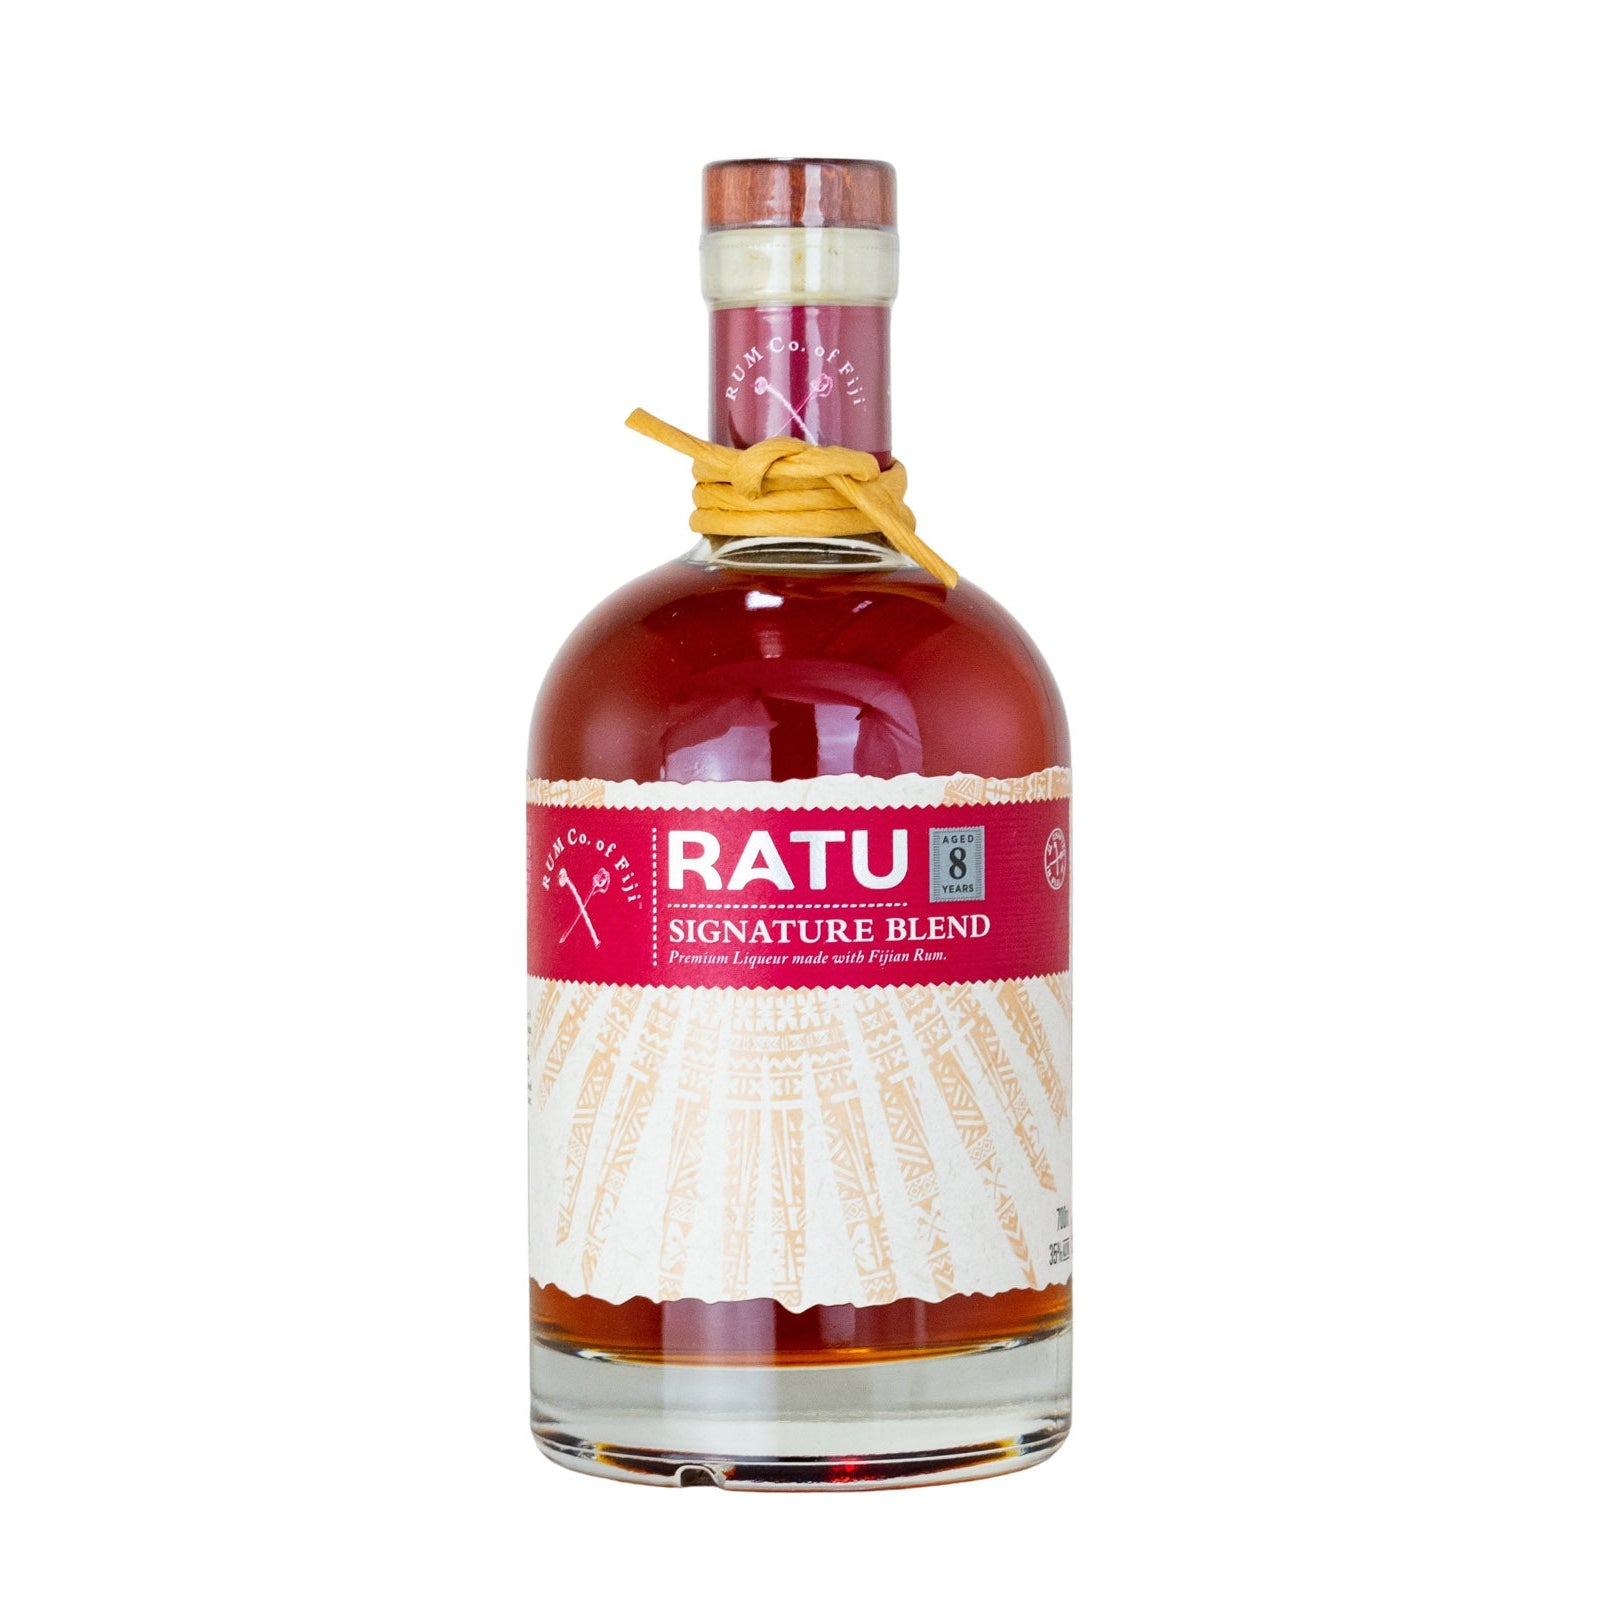 RATU 8 Years Old Signature Blend Rumlikör 35% Vol. 0,7l